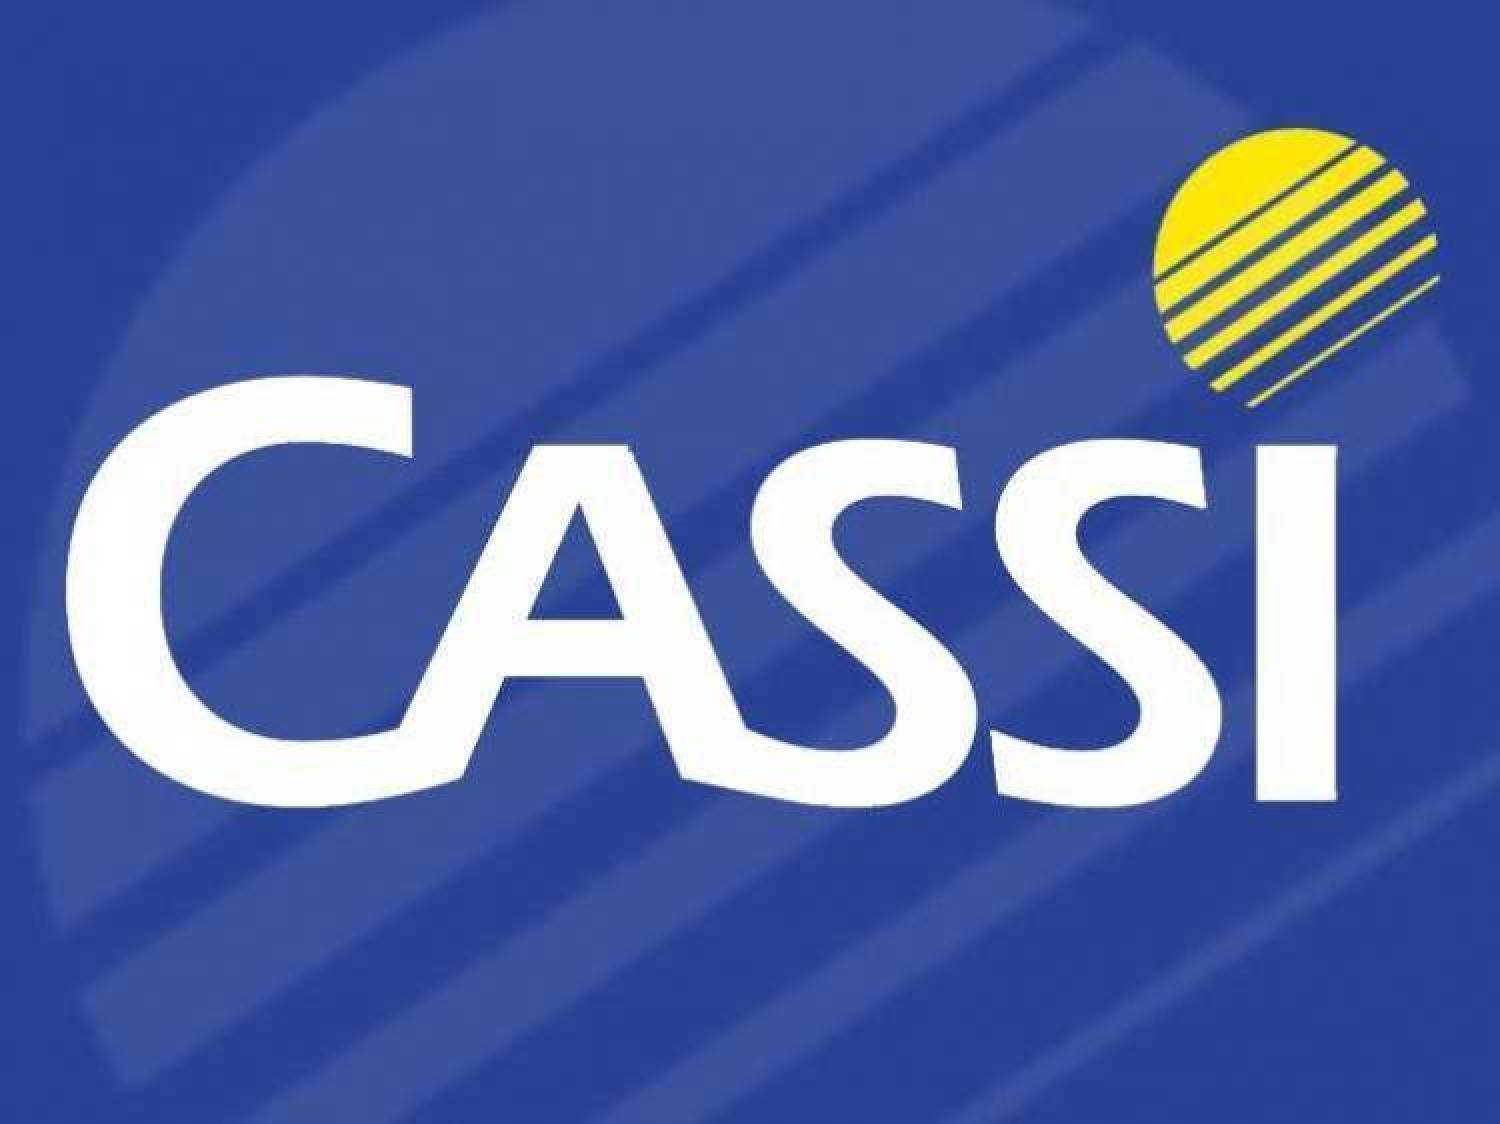 Cassi: Banco do Brasil aceita proposta elaborada com as entidades